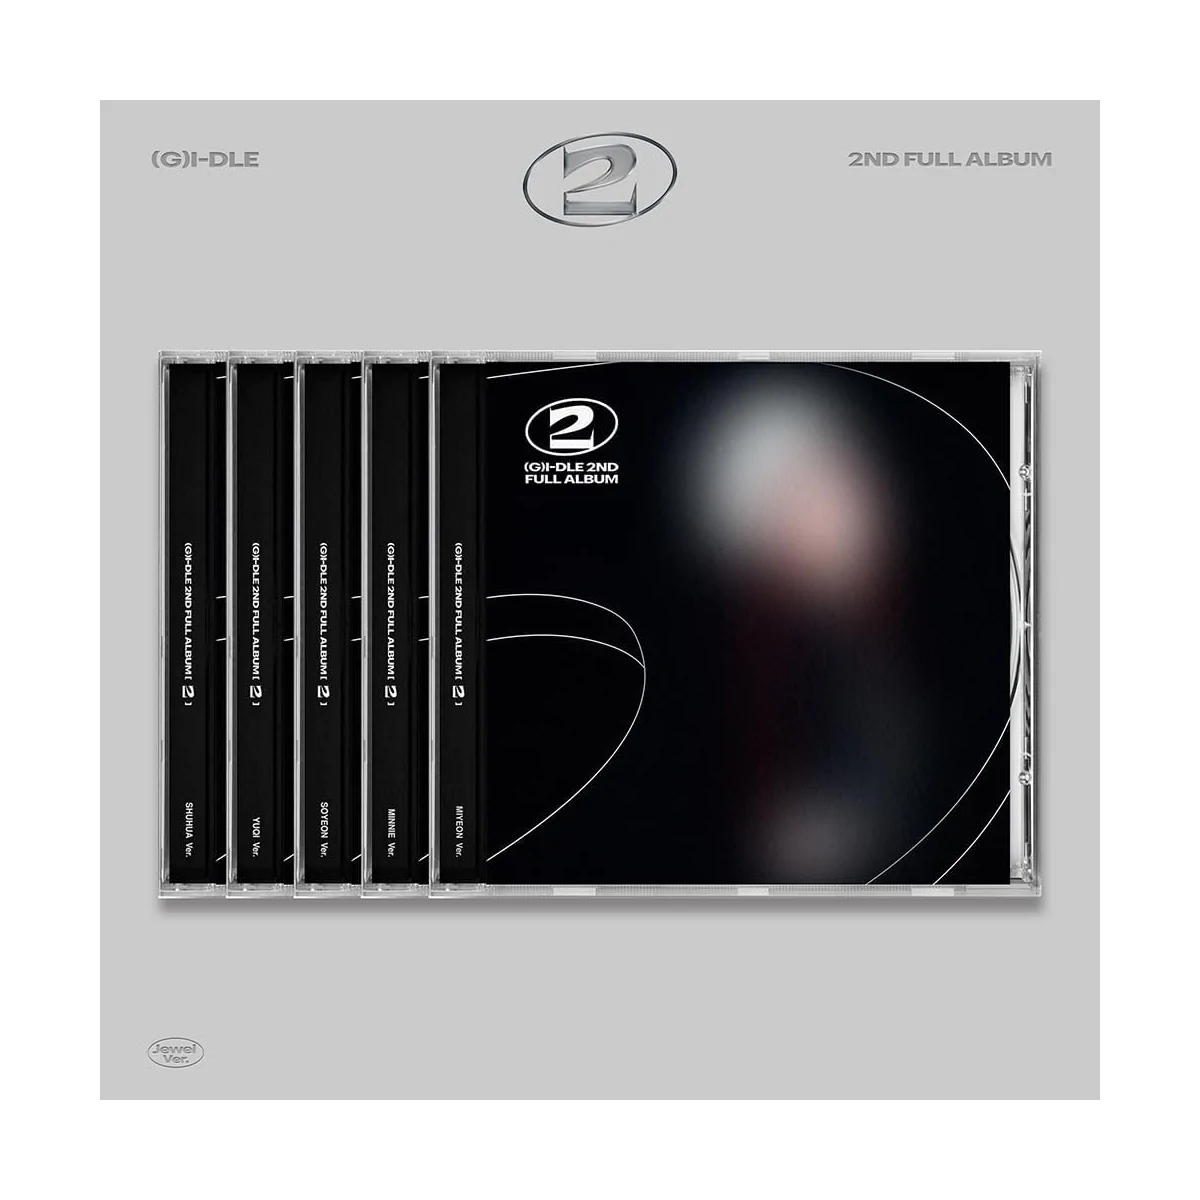 (G)I-DLE - 2 (Jewel SOYEON Version) (2nd Full Album) 